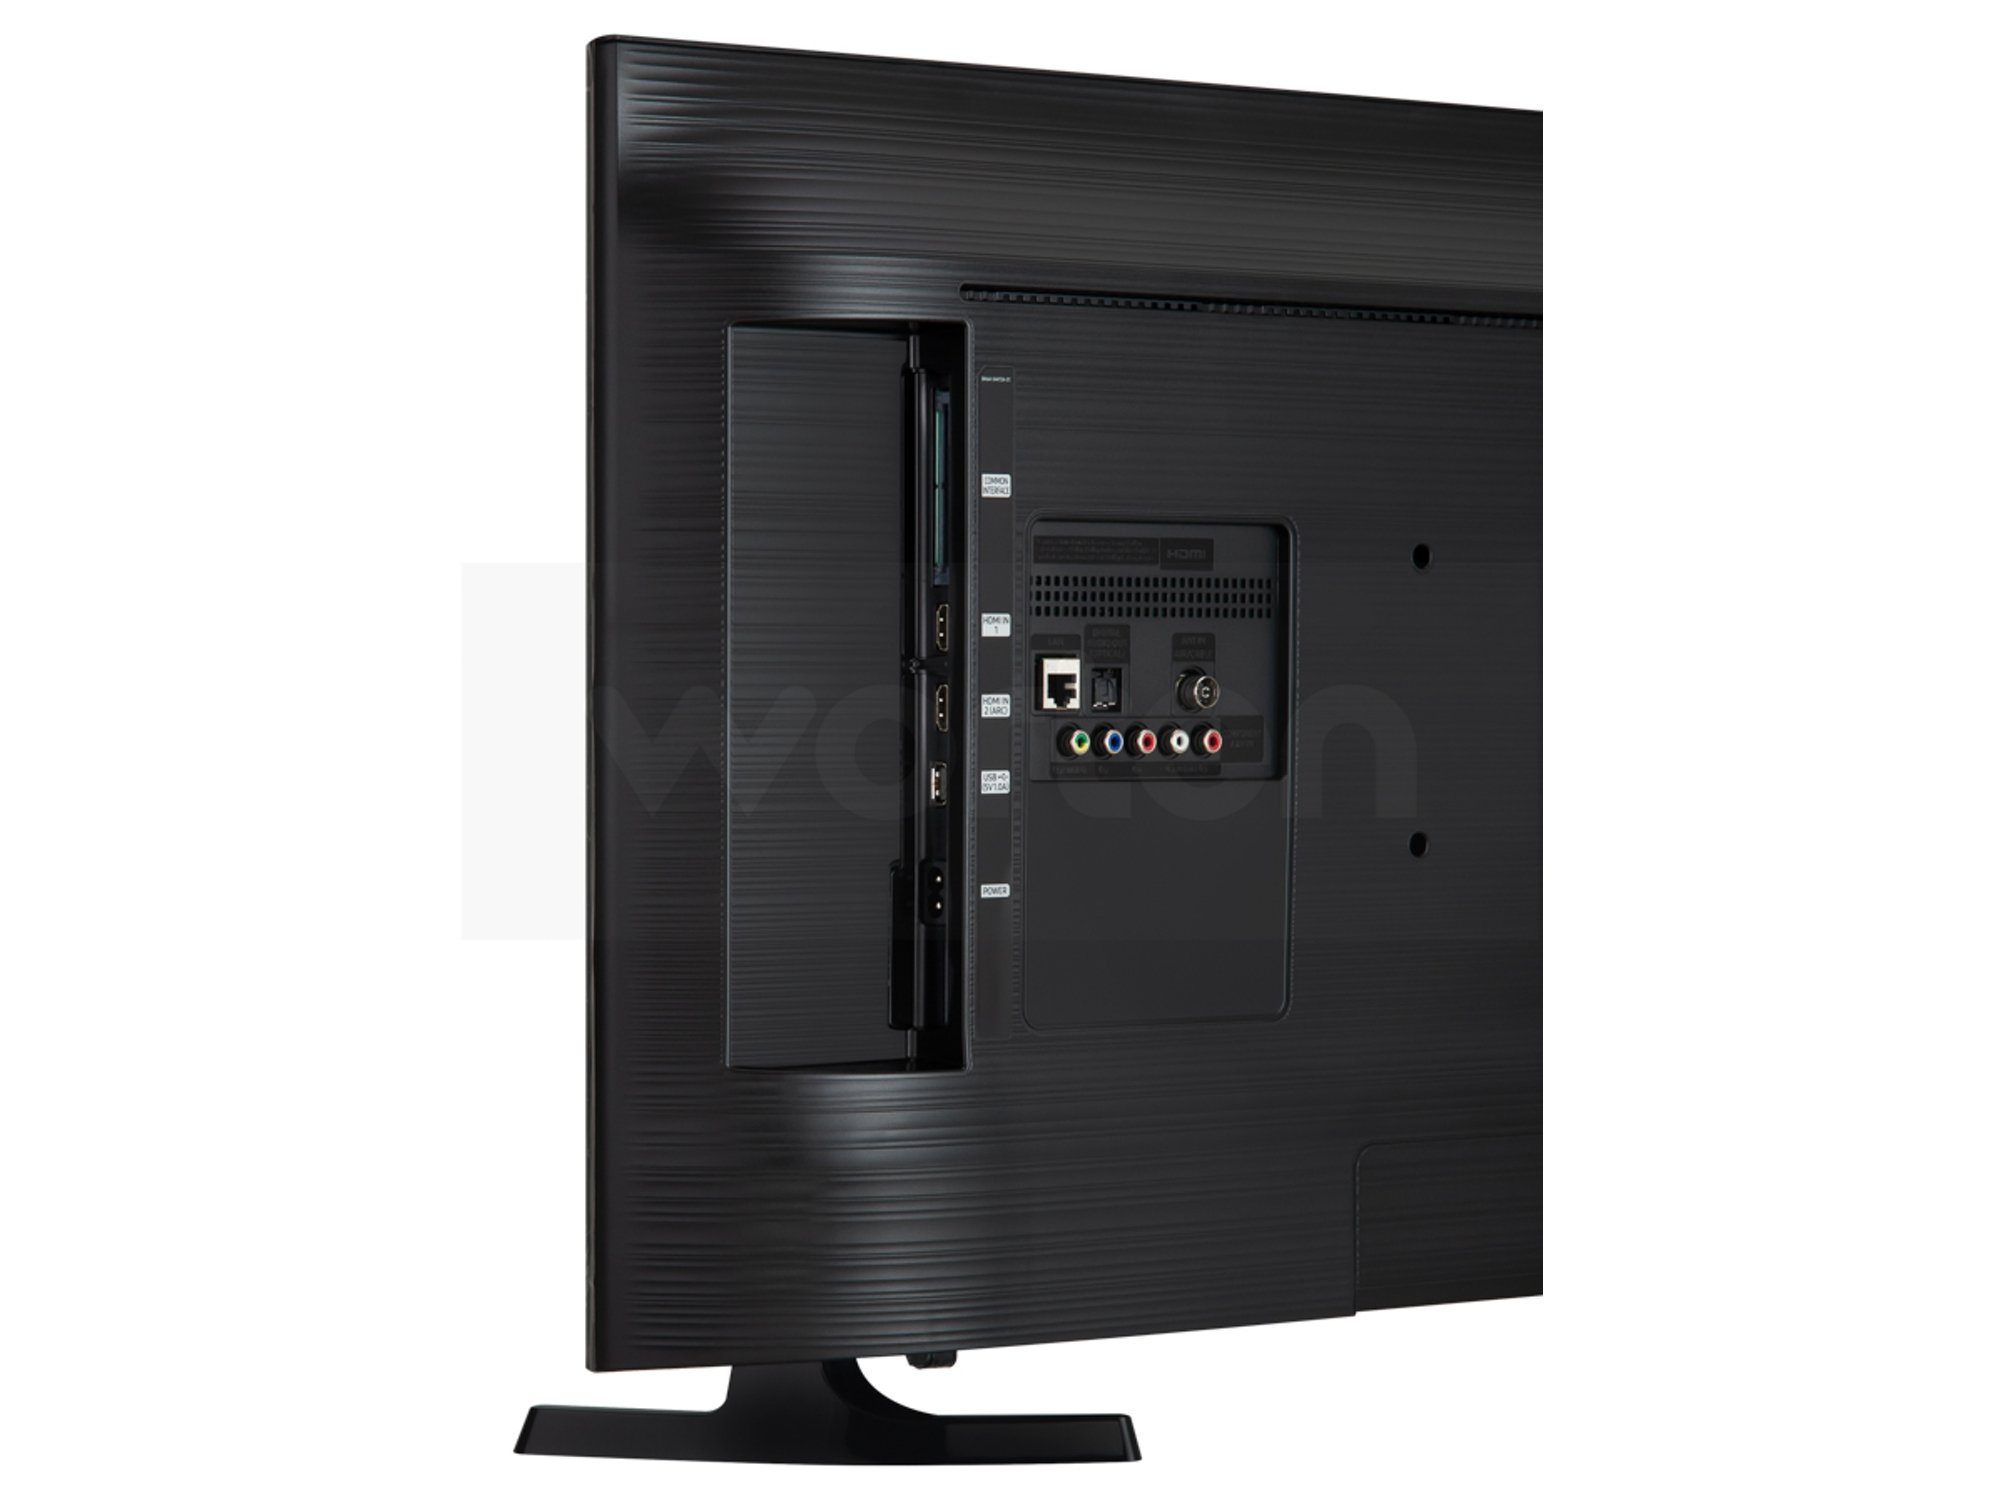 TV SAMSUNG UE32T4305AK (LED - 32'' - 81 cm - HD - Smart TV)